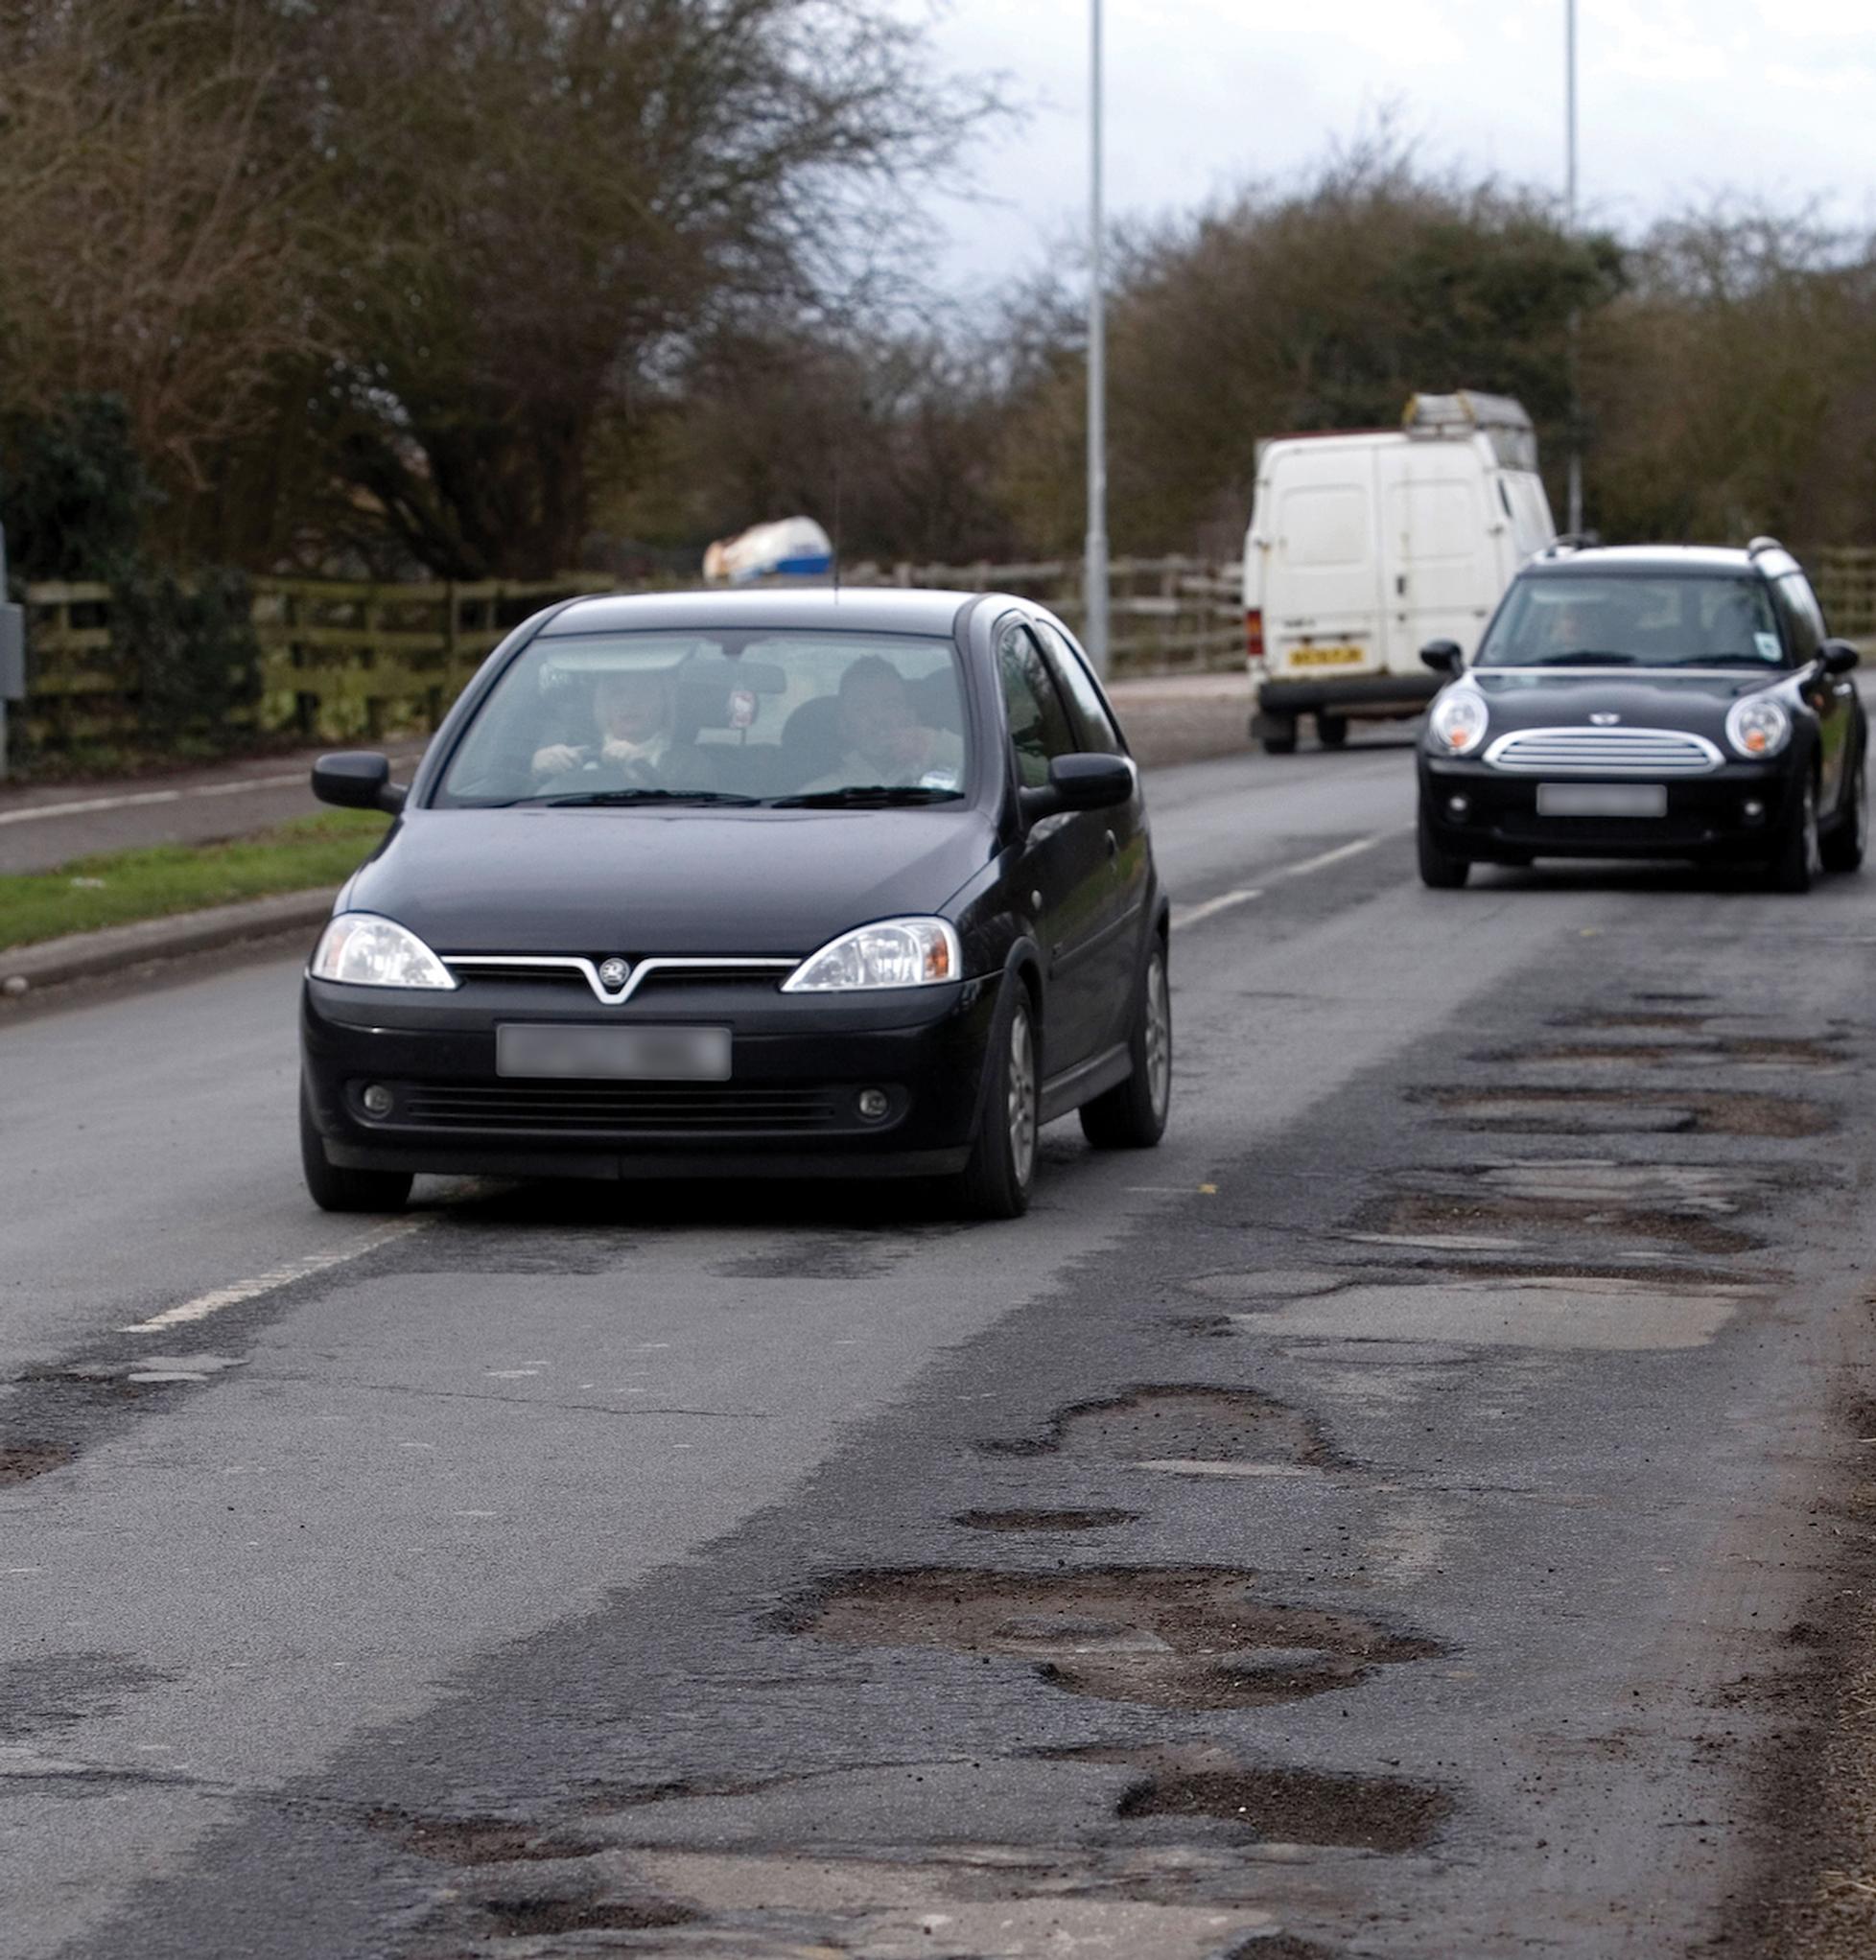 Potholes are a common hazard on roads